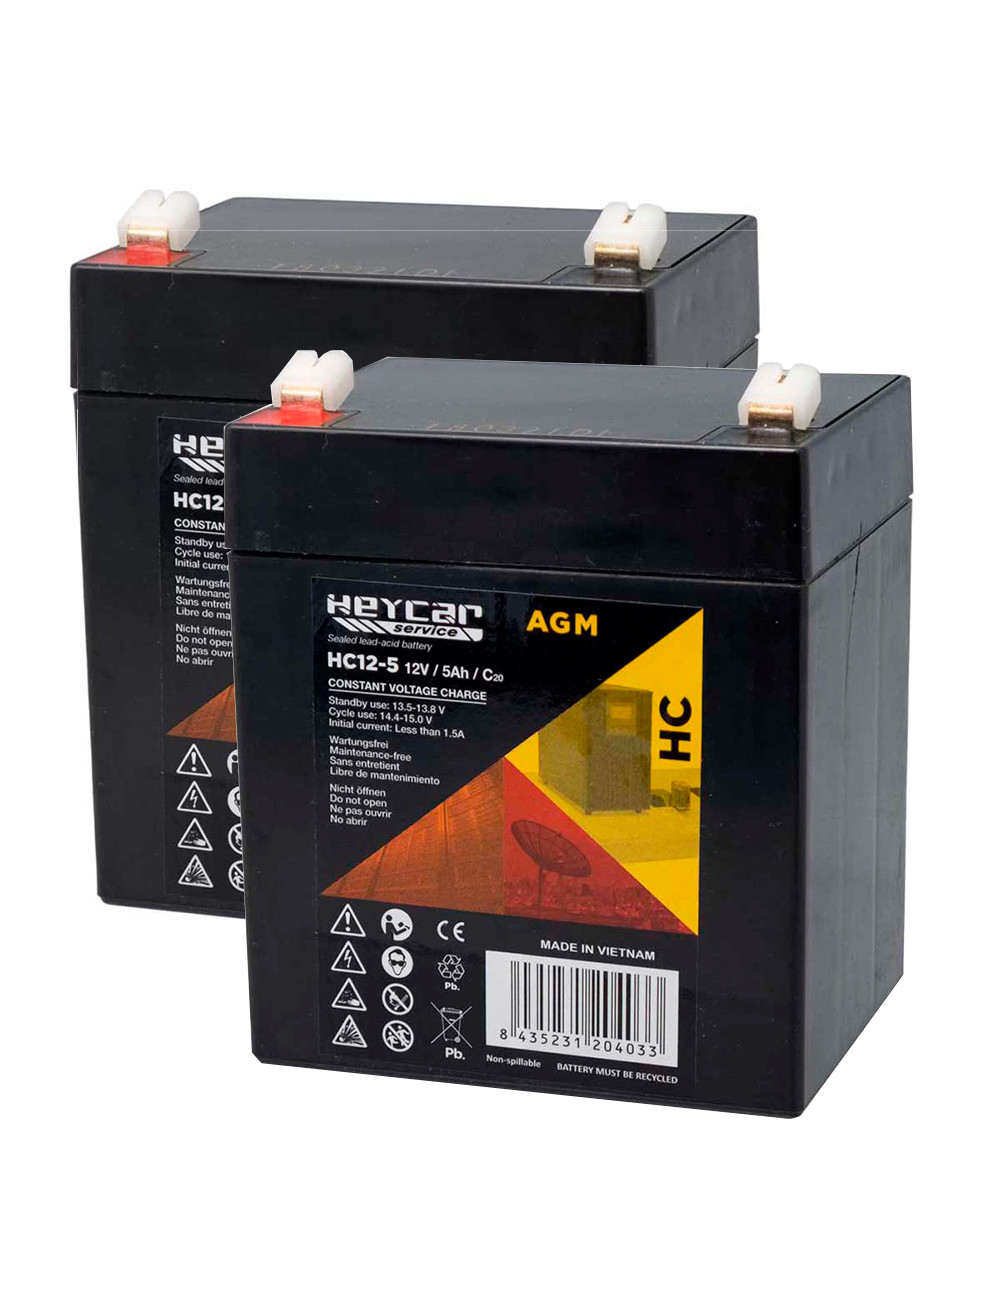 Pack 2 baterías para grúa Practika de Forta de 12V 5Ah C20 Heycar HC12-5 - 2xHC12-5 -  -  - 1